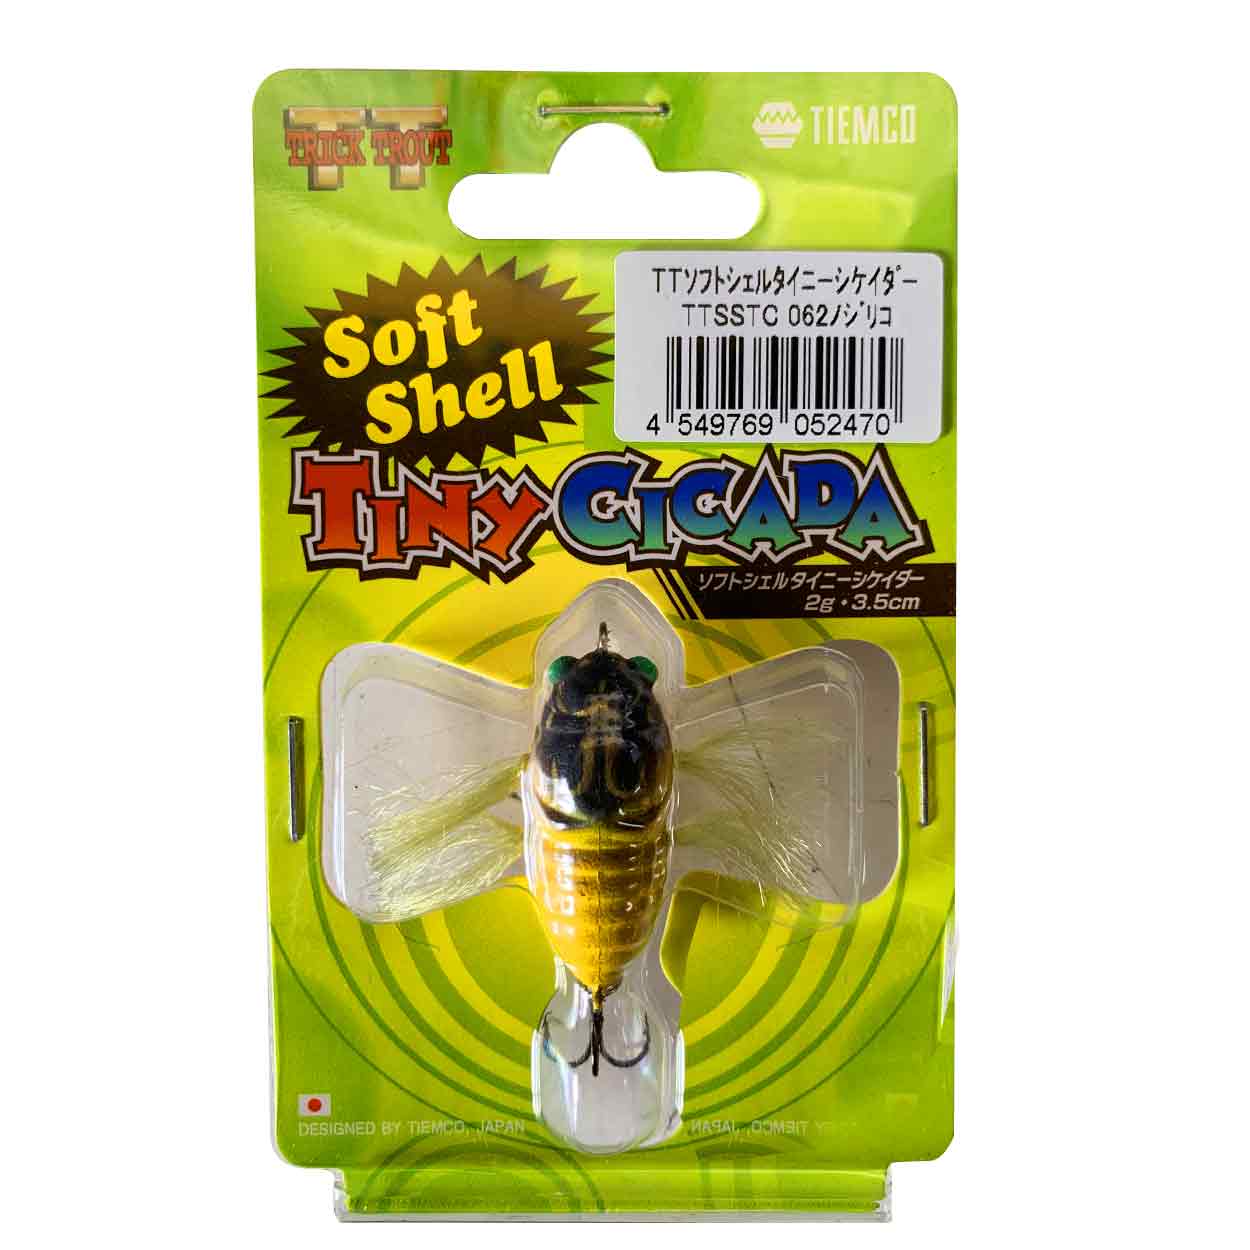 TIEMCO – Soft Shell Tiny Cicada – Fishing Online Australia